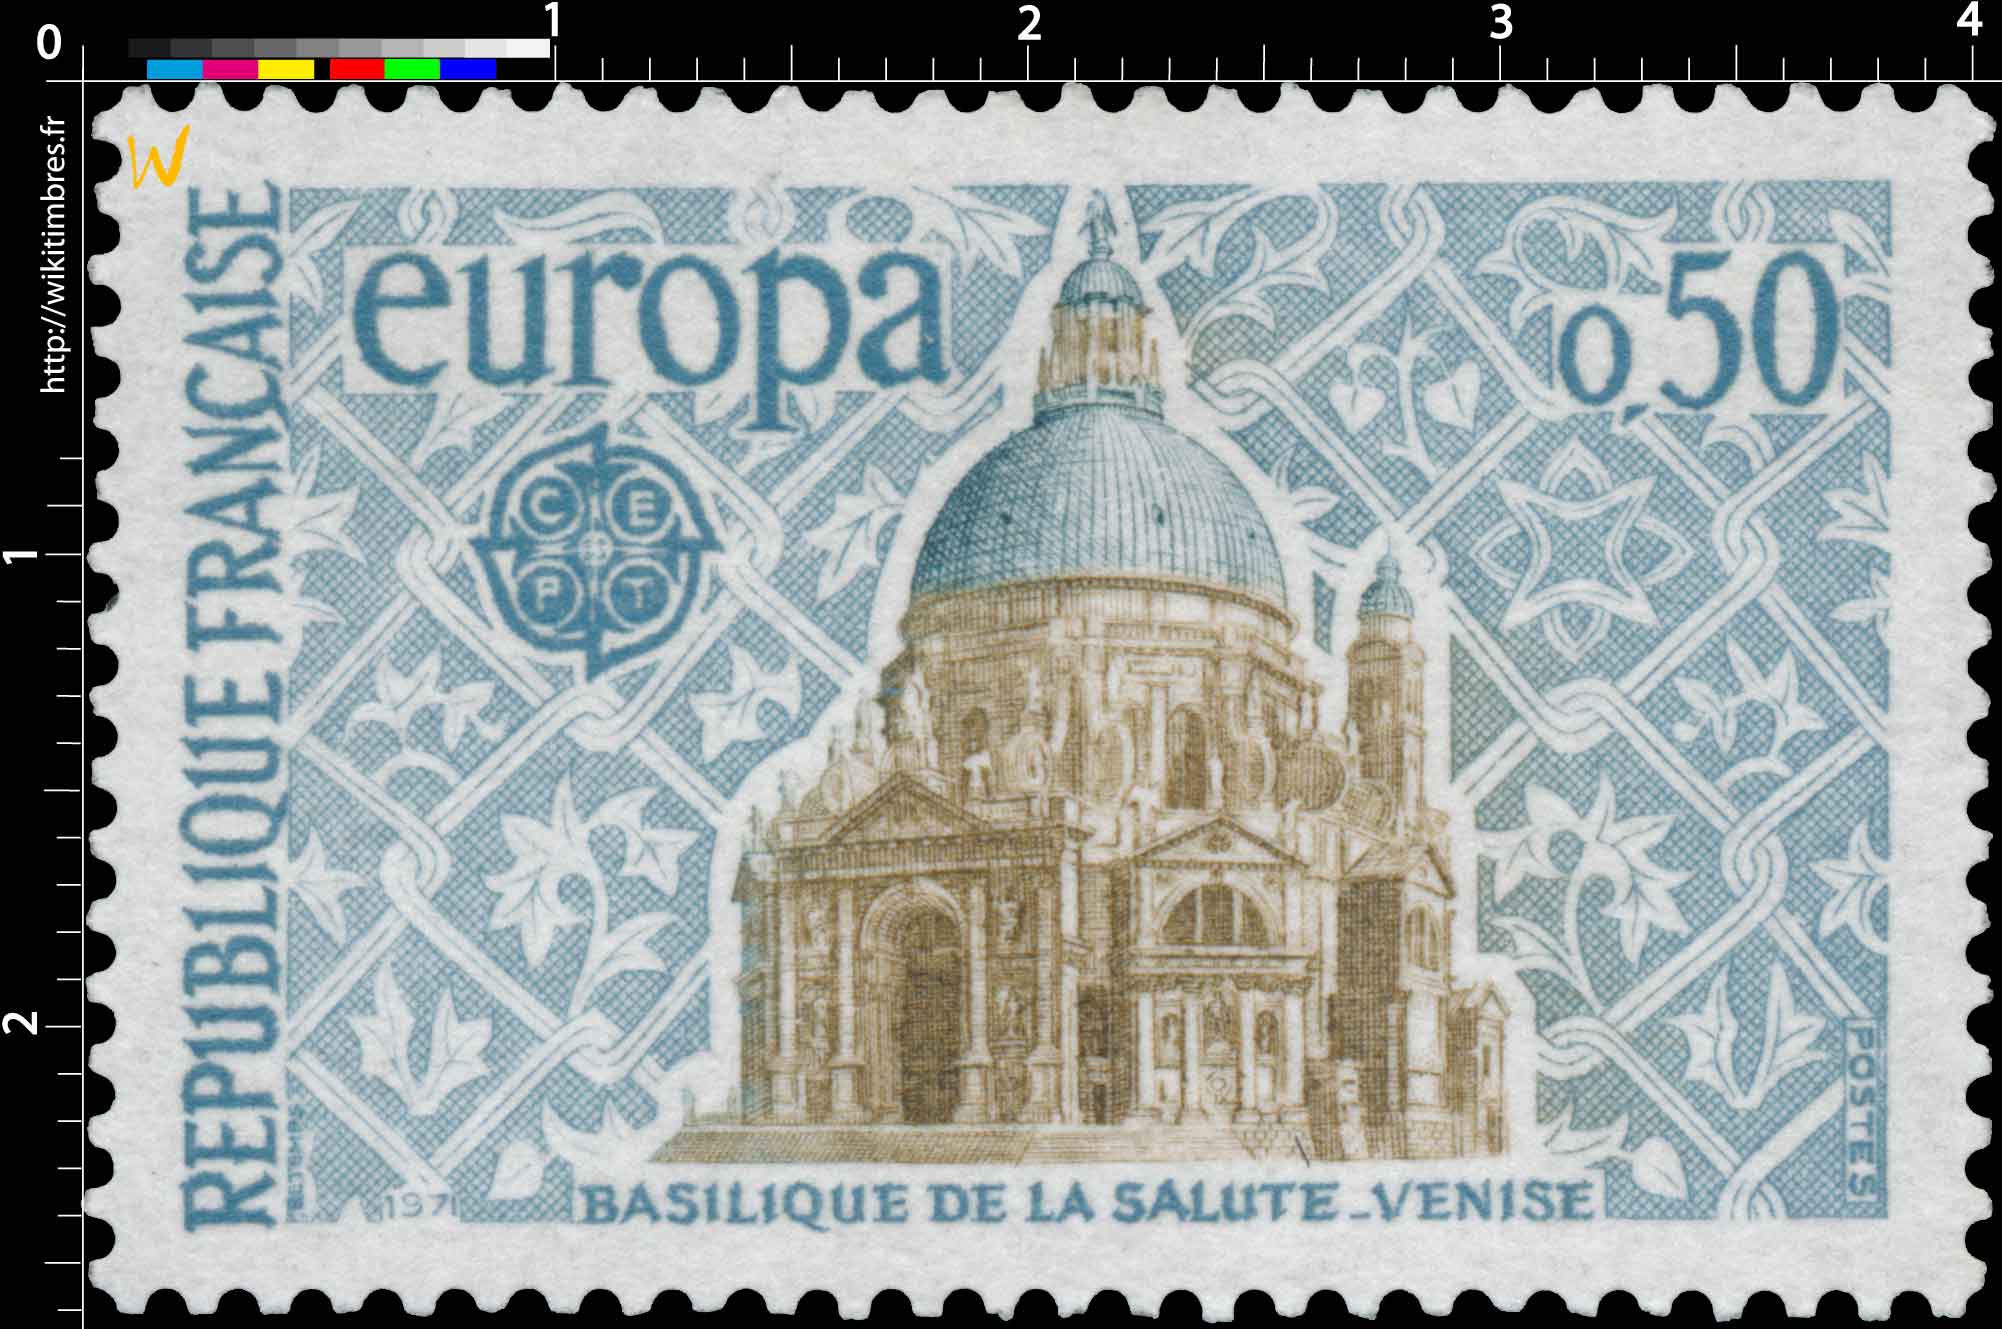 1971 Europa CEPT BASILIQUE DE LA SALUTE - VENISE